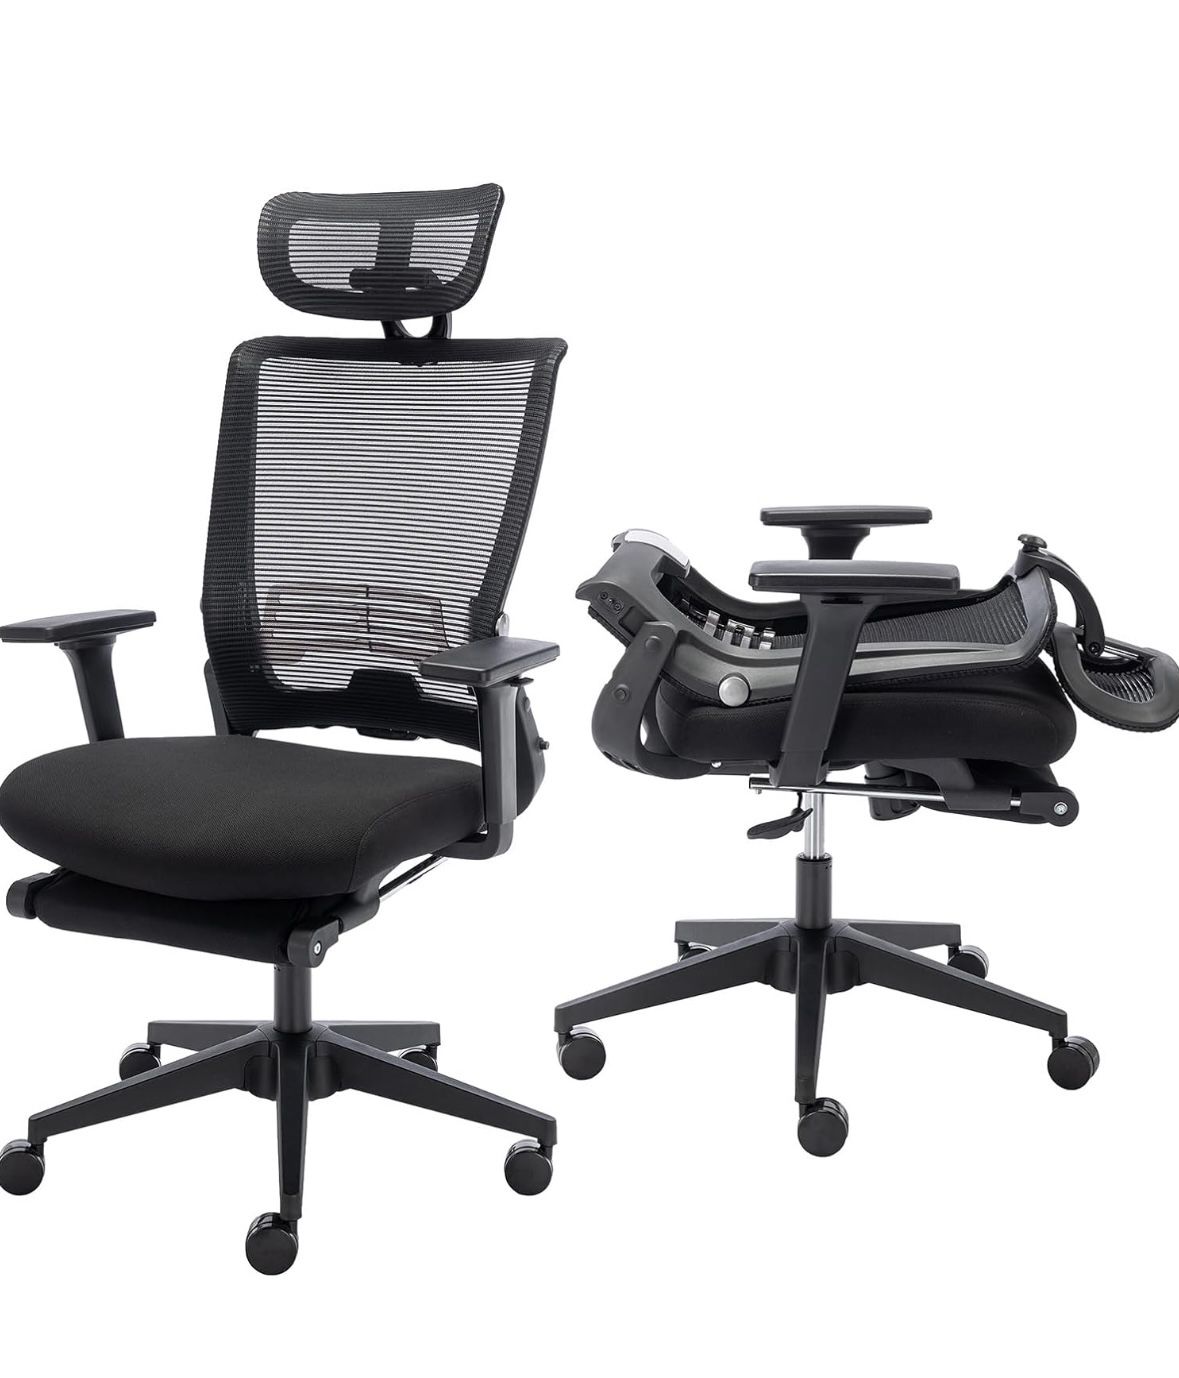 Ergonomic foldable office chair - black